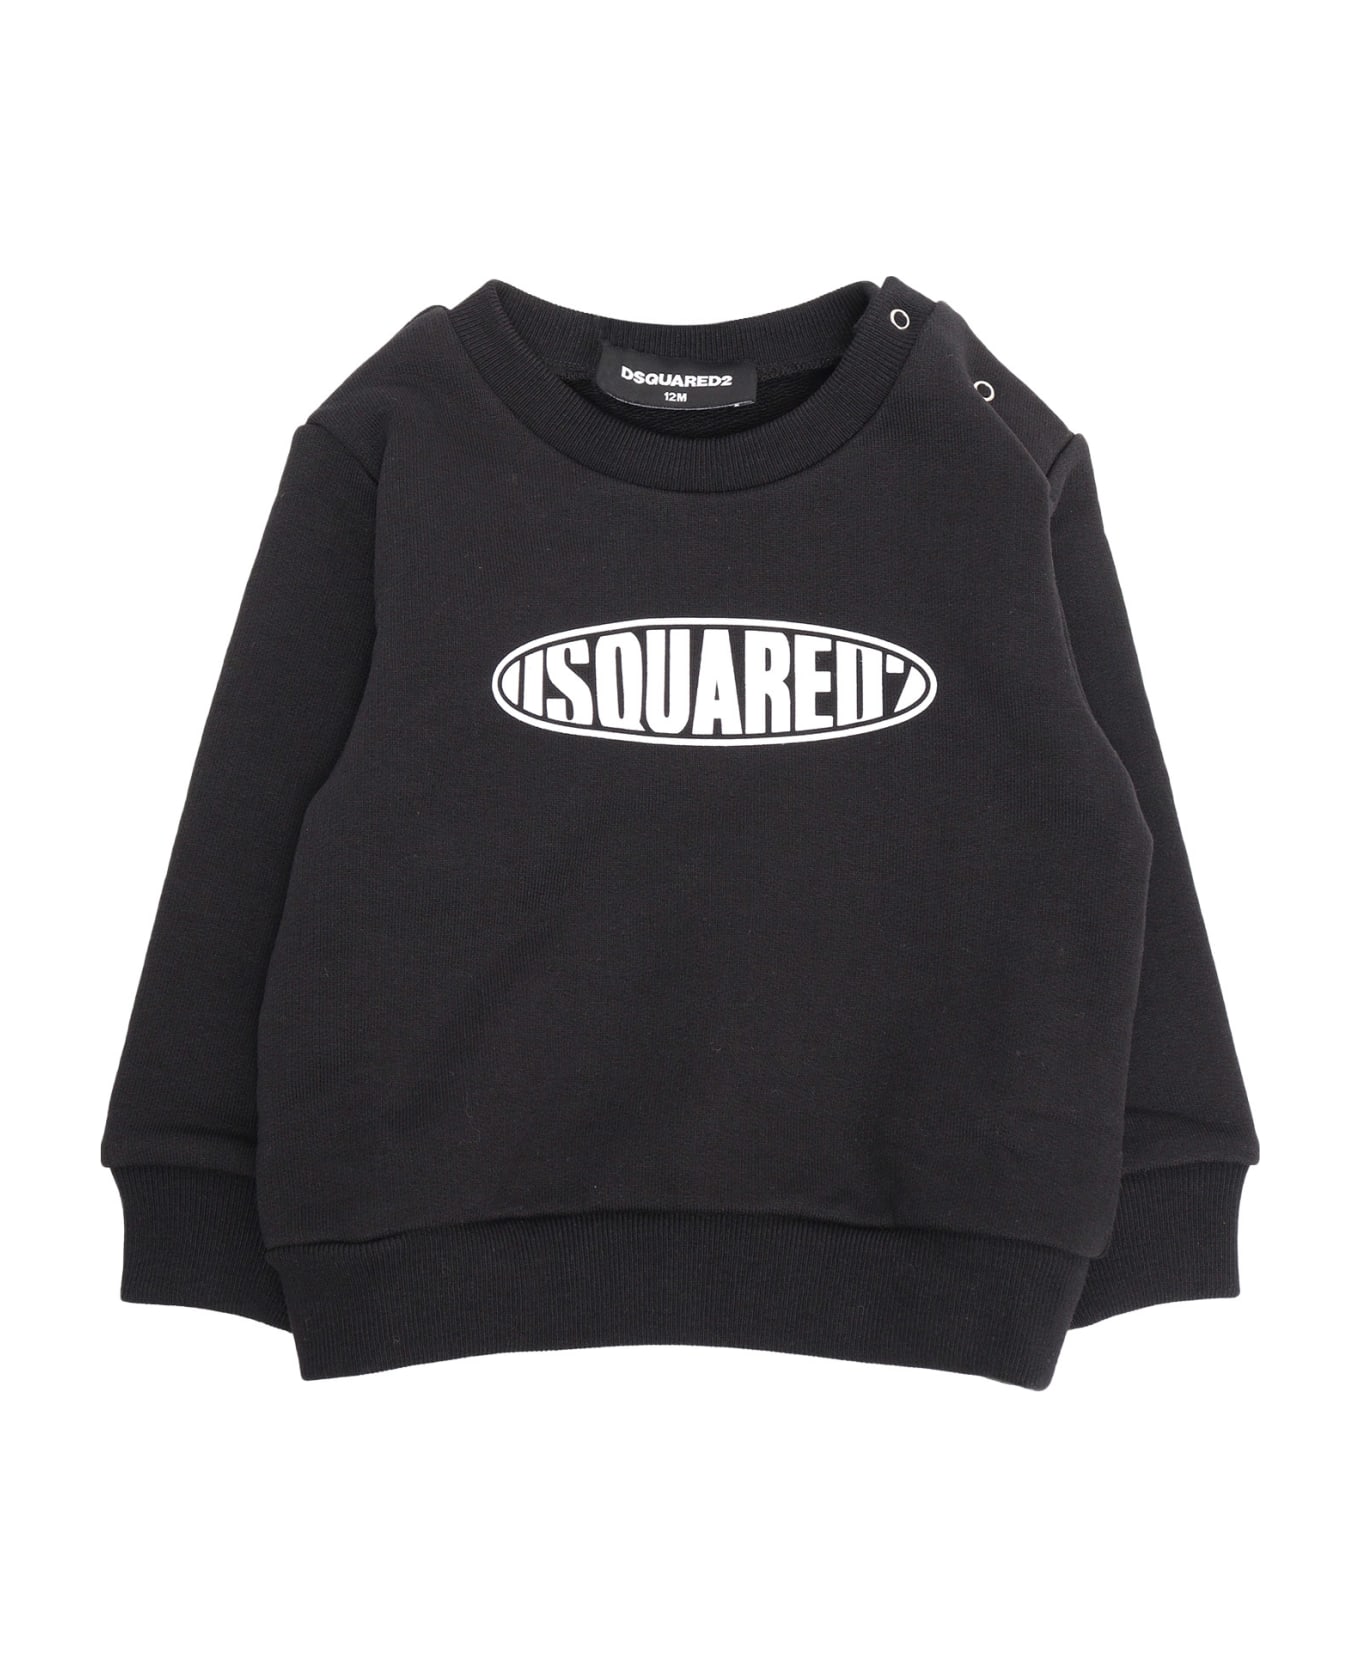 Dsquared2 D-squared2 Sweatshirt For Children - BLACK